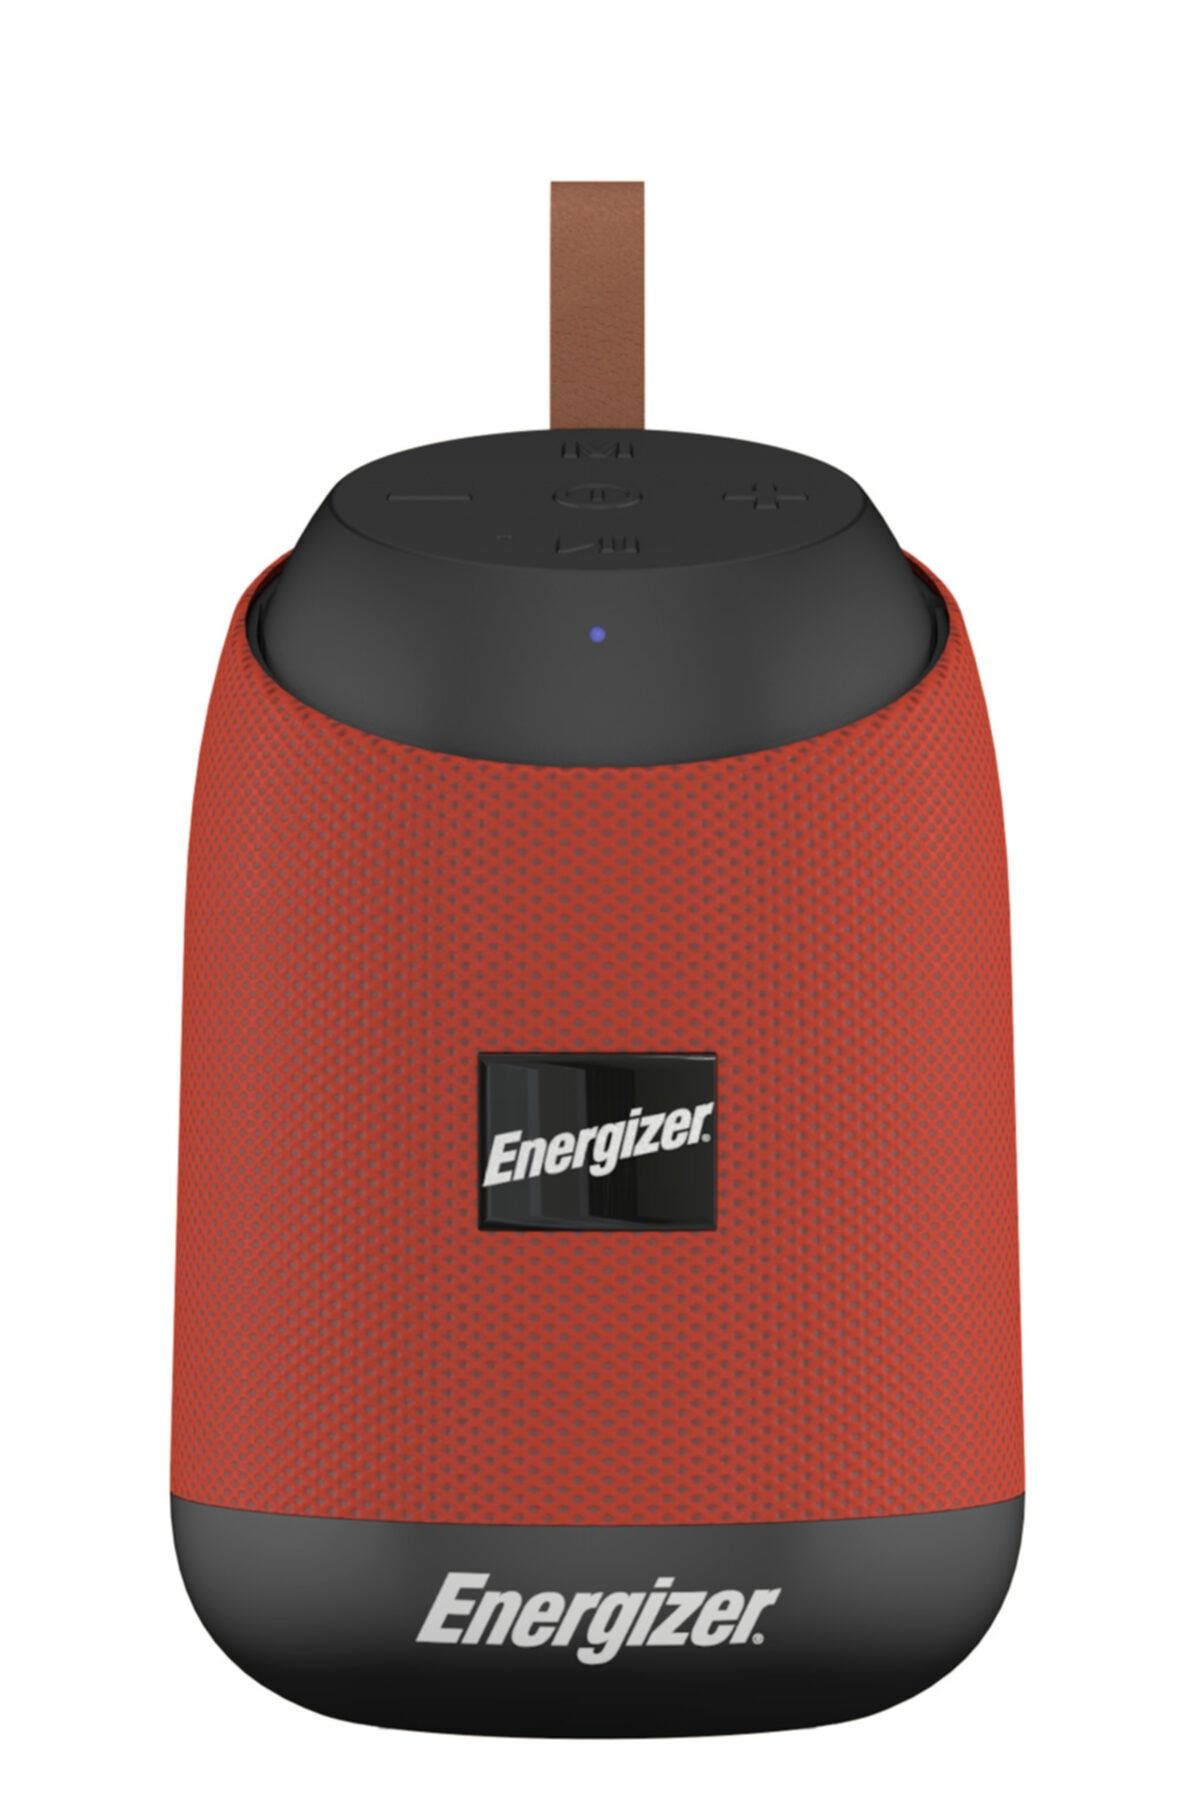 Energizer Power Sound Bluetooth Hoparlör Bts-061 - Kırmızı